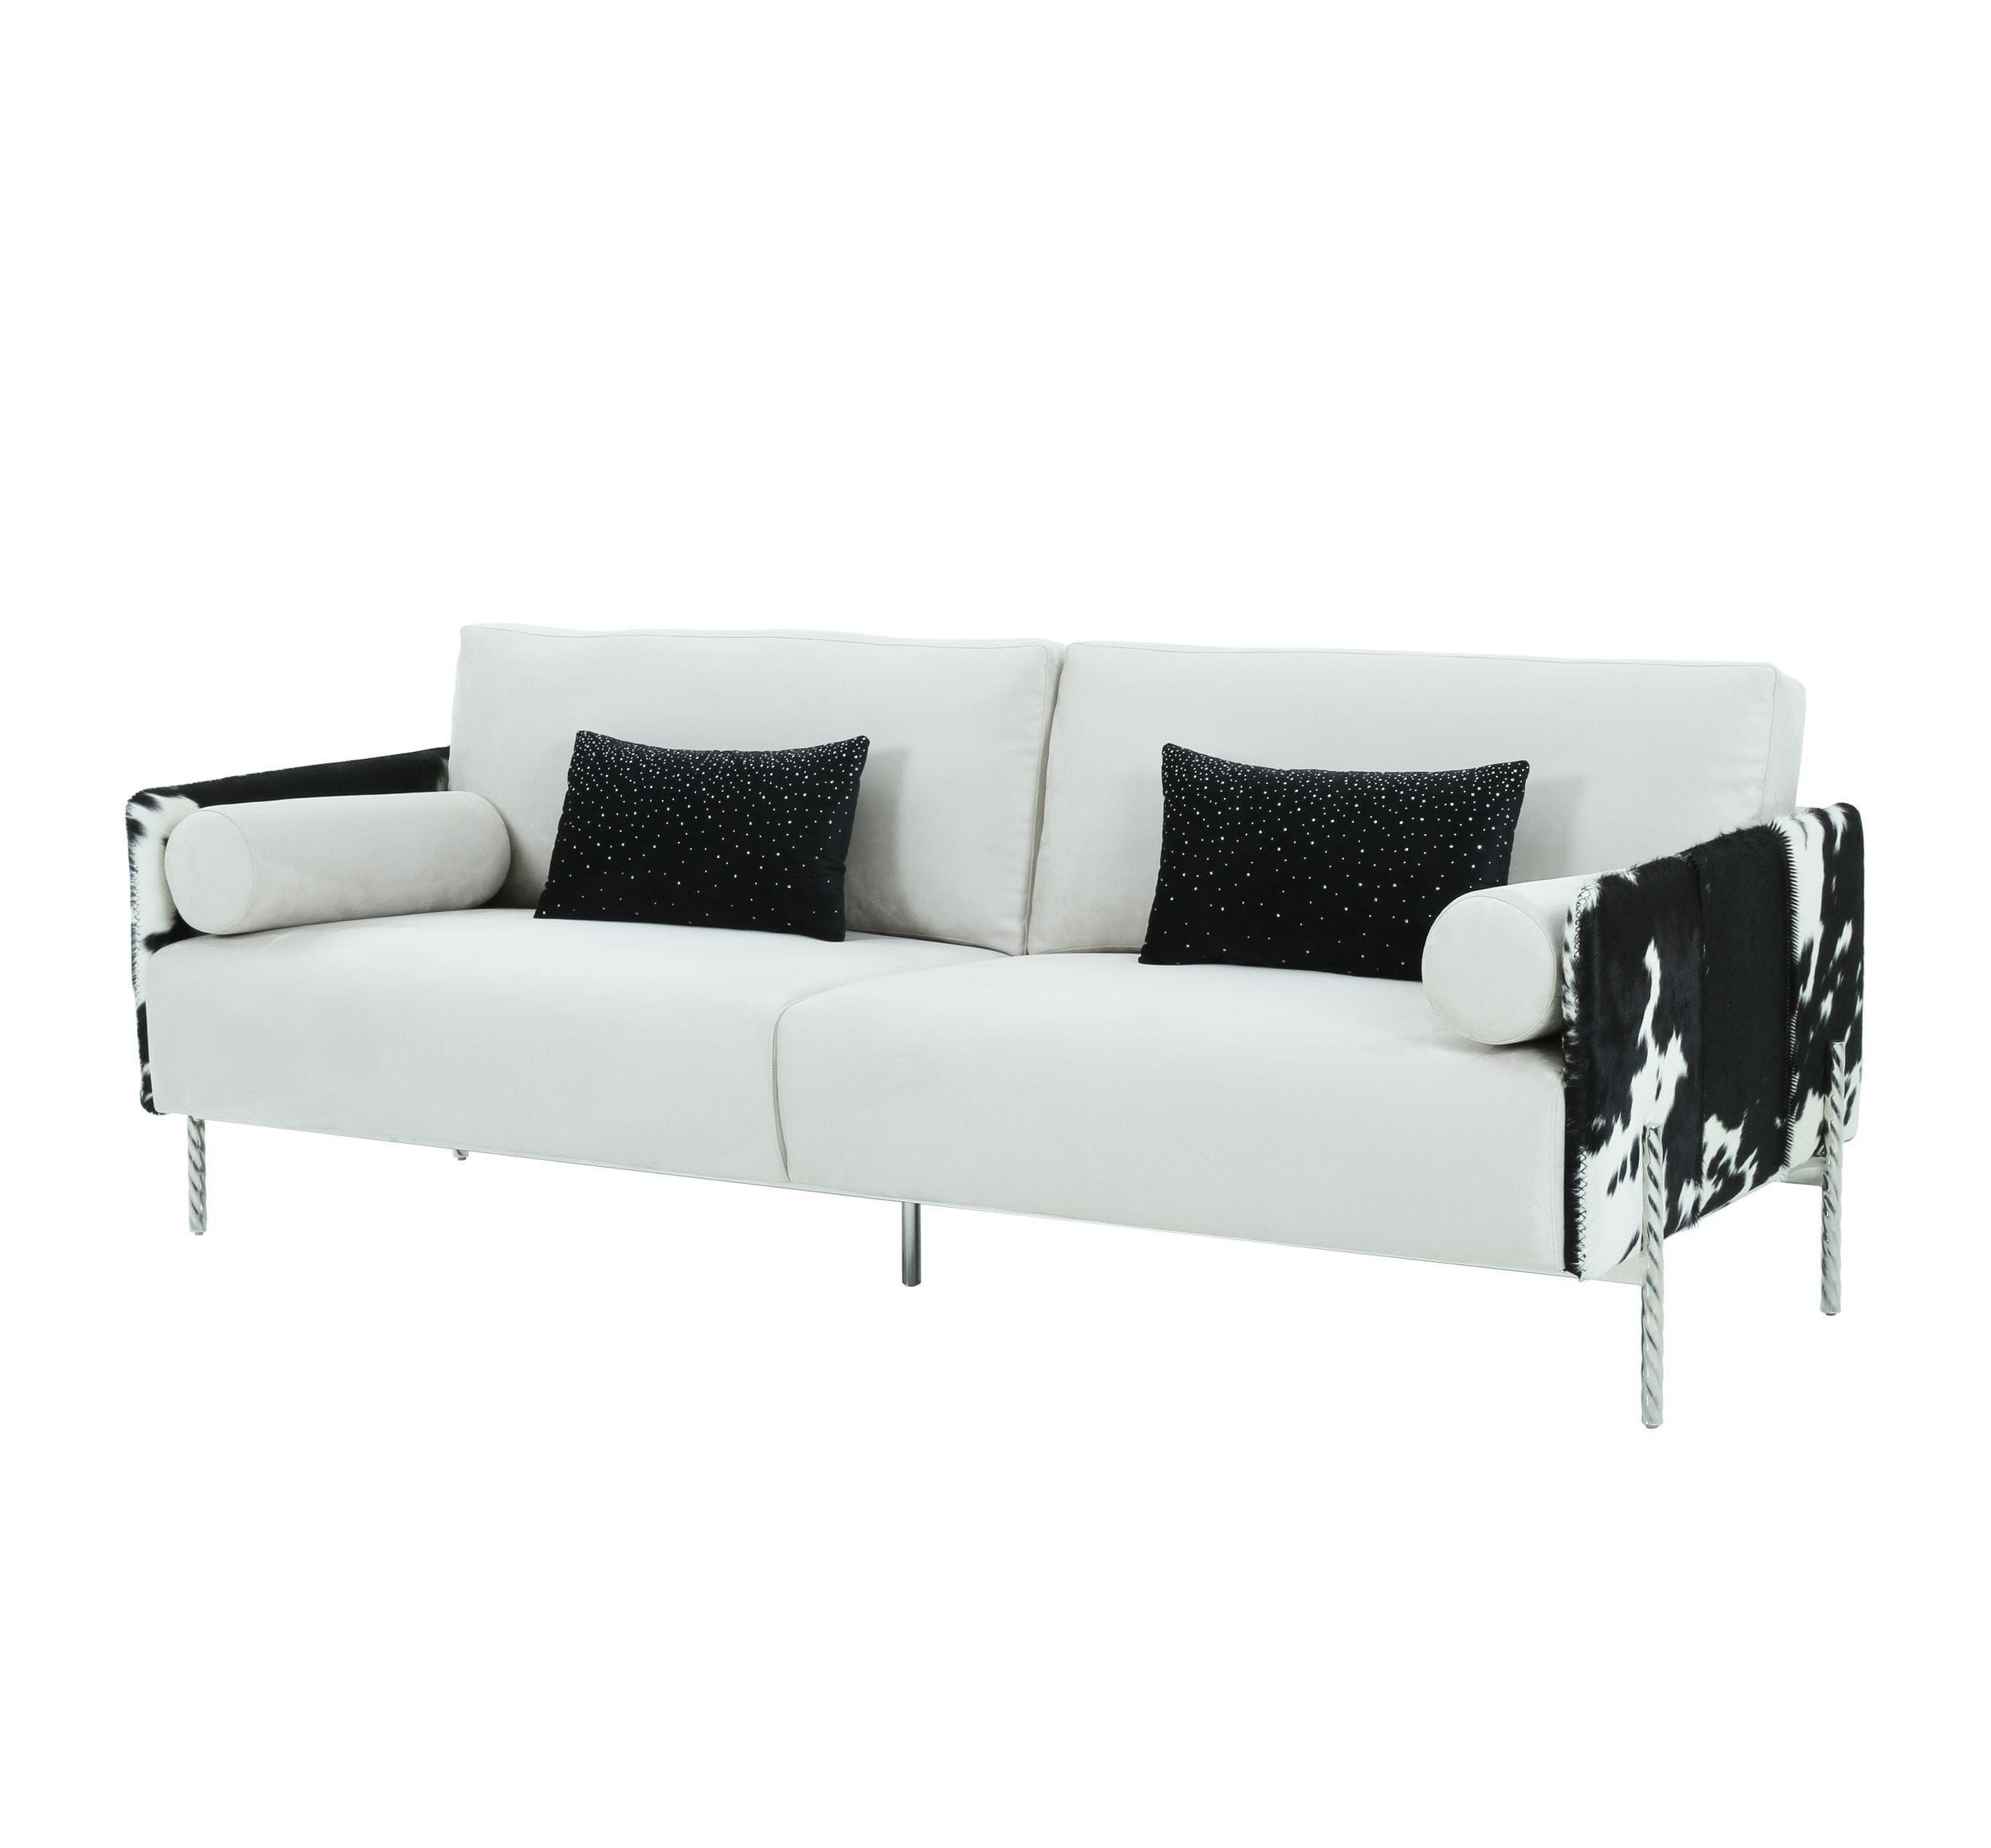 Contemporary, Modern Sofa VGODZW-20028-S VGODZW-20028-S in White, Black Fabric